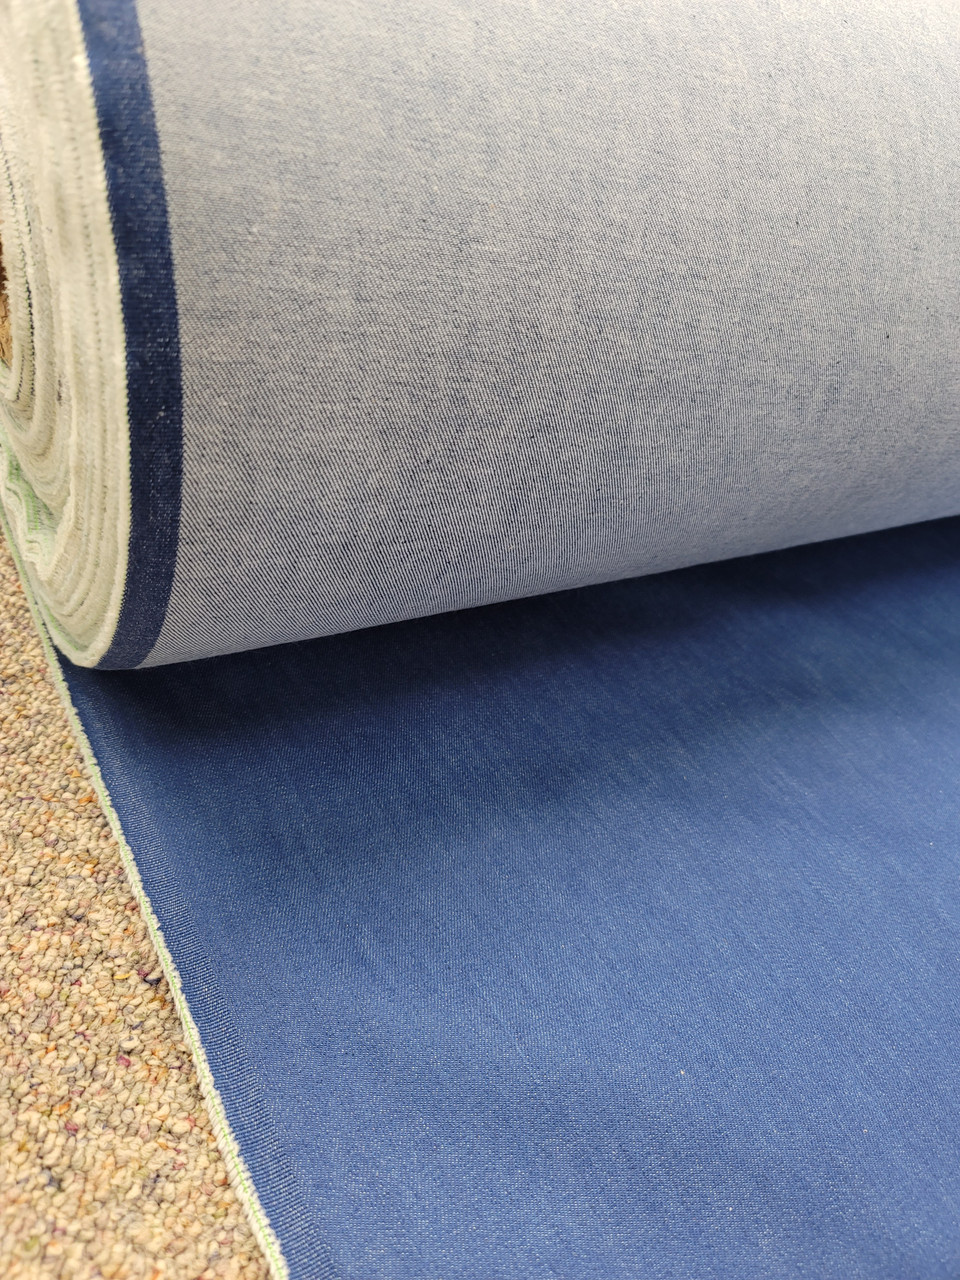 Stonewashed Denim Blue Plain Woven Upholstery Fabric by the Yard E8368 -  KOVI Fabrics